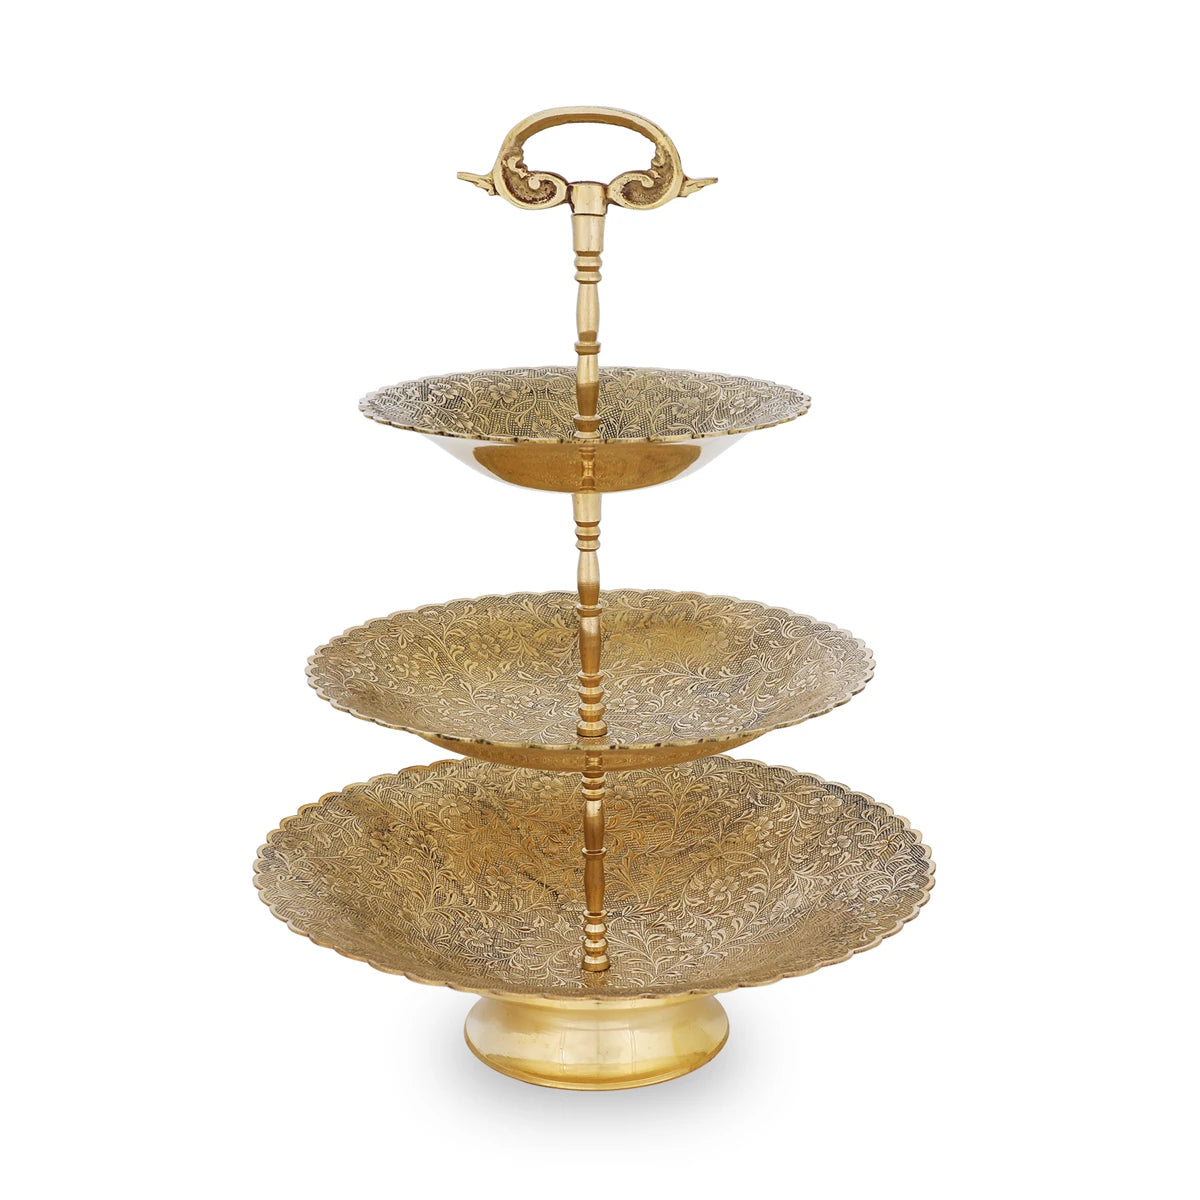 Authentic Handmade Brass Metal Three-Tier Fruit Stand